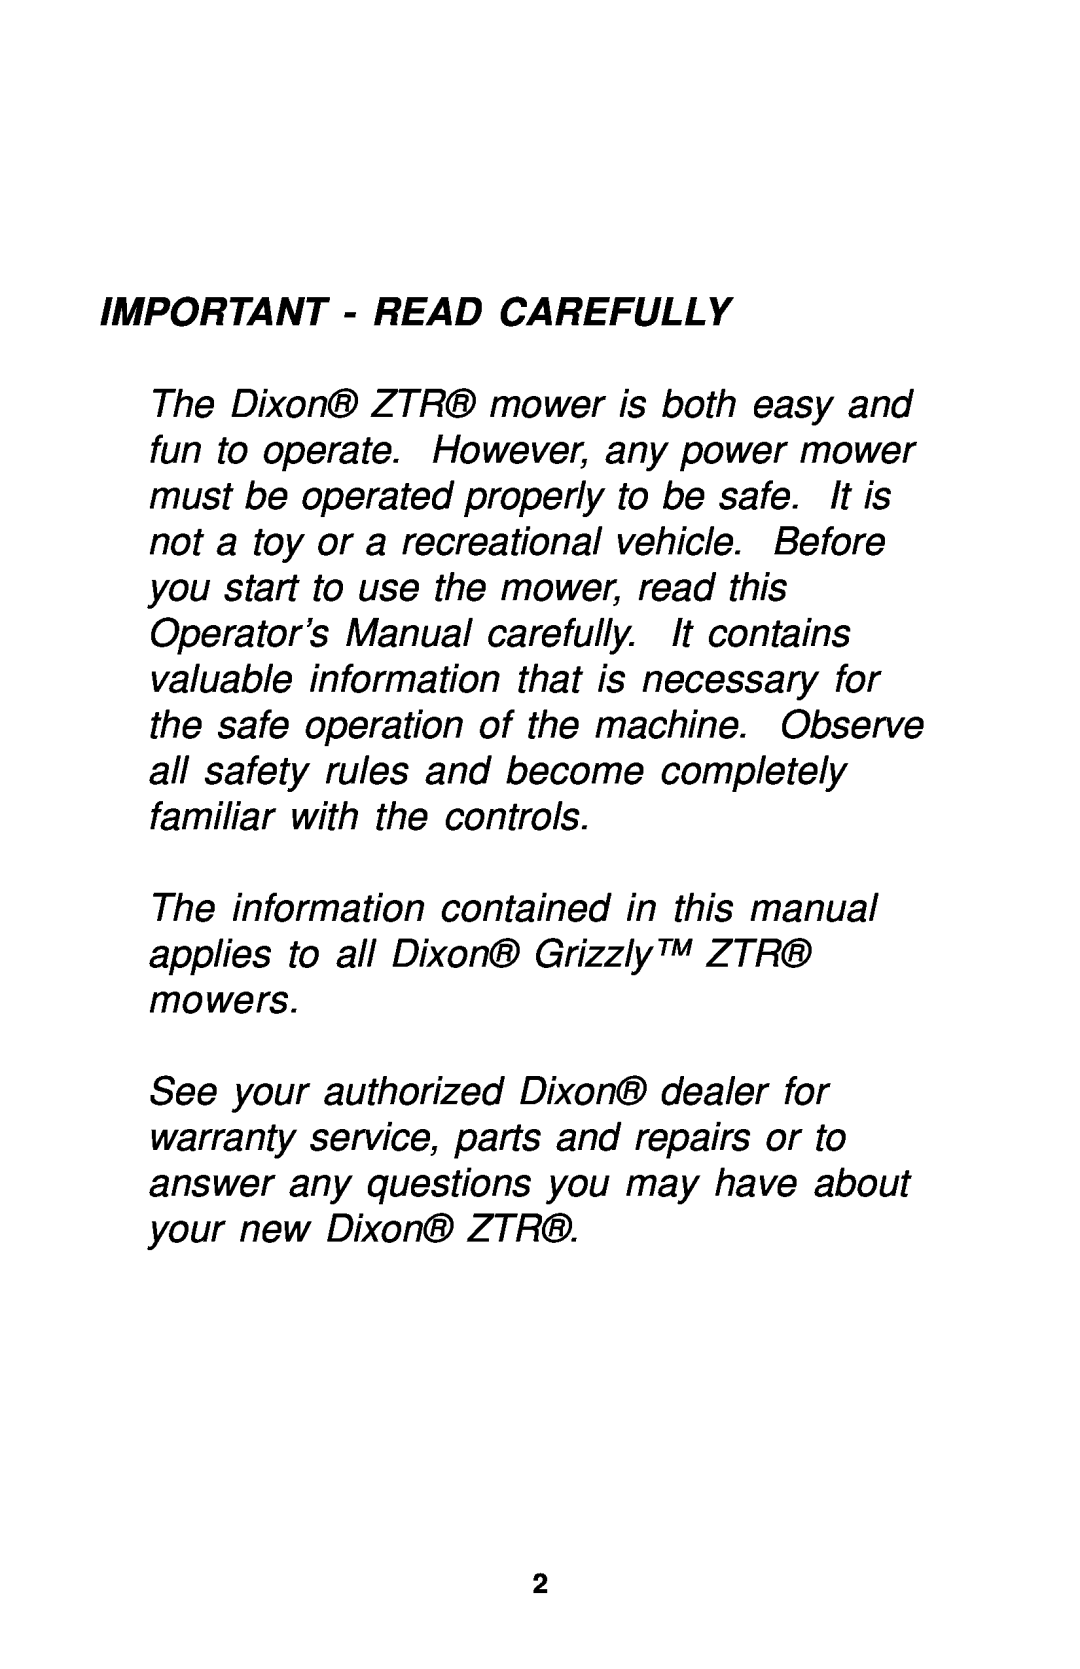 Dixon 18134-1004 manual Important - Read Carefully 